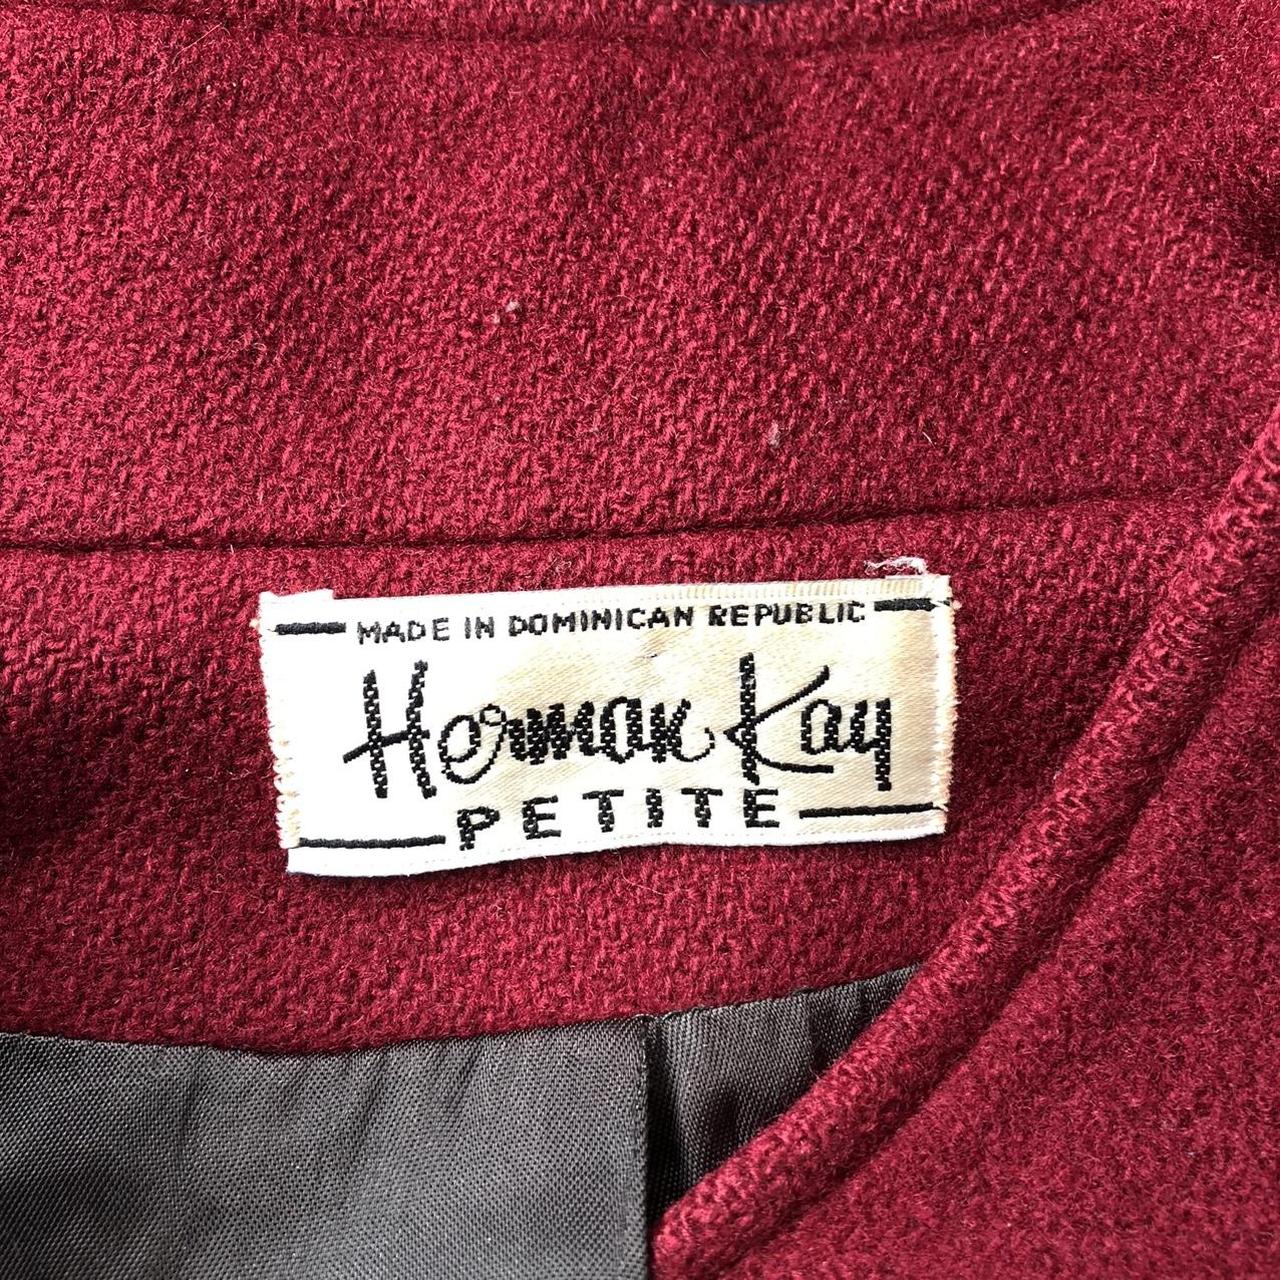 1980's Herman Kay wool coat! I love their classic... - Depop